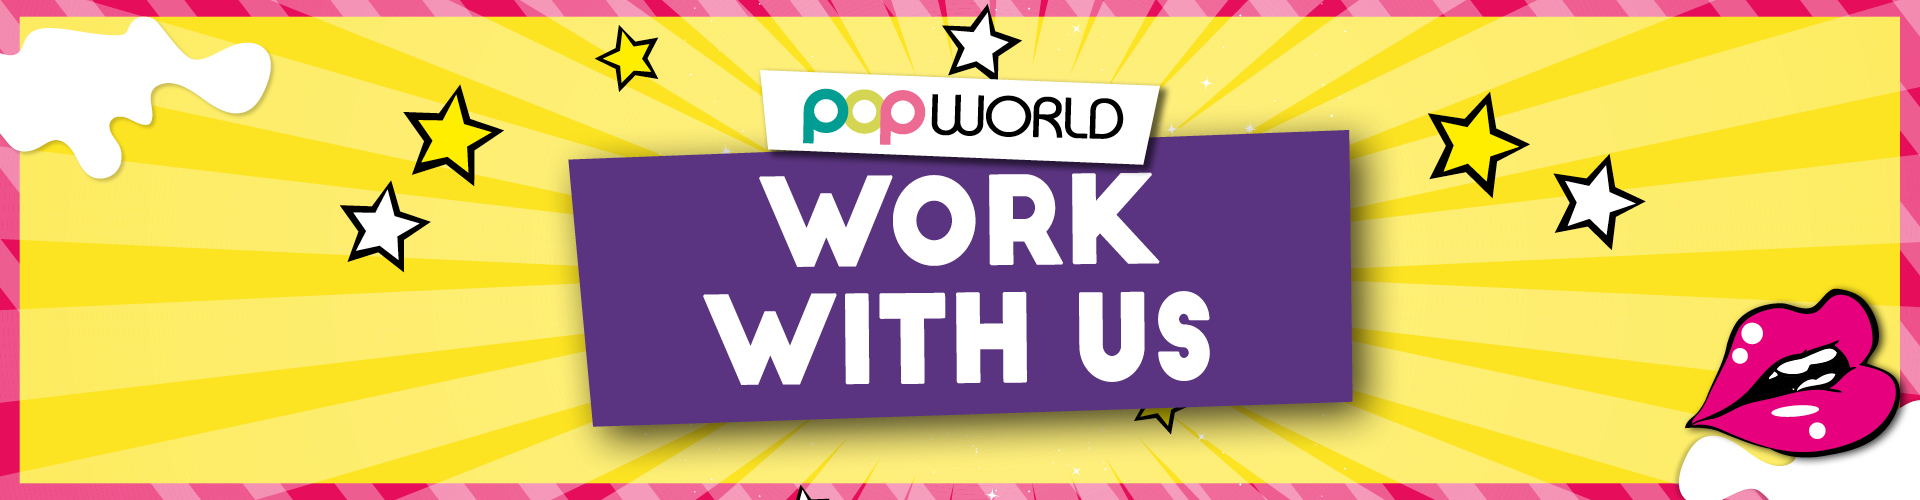 Work With Us Popworld